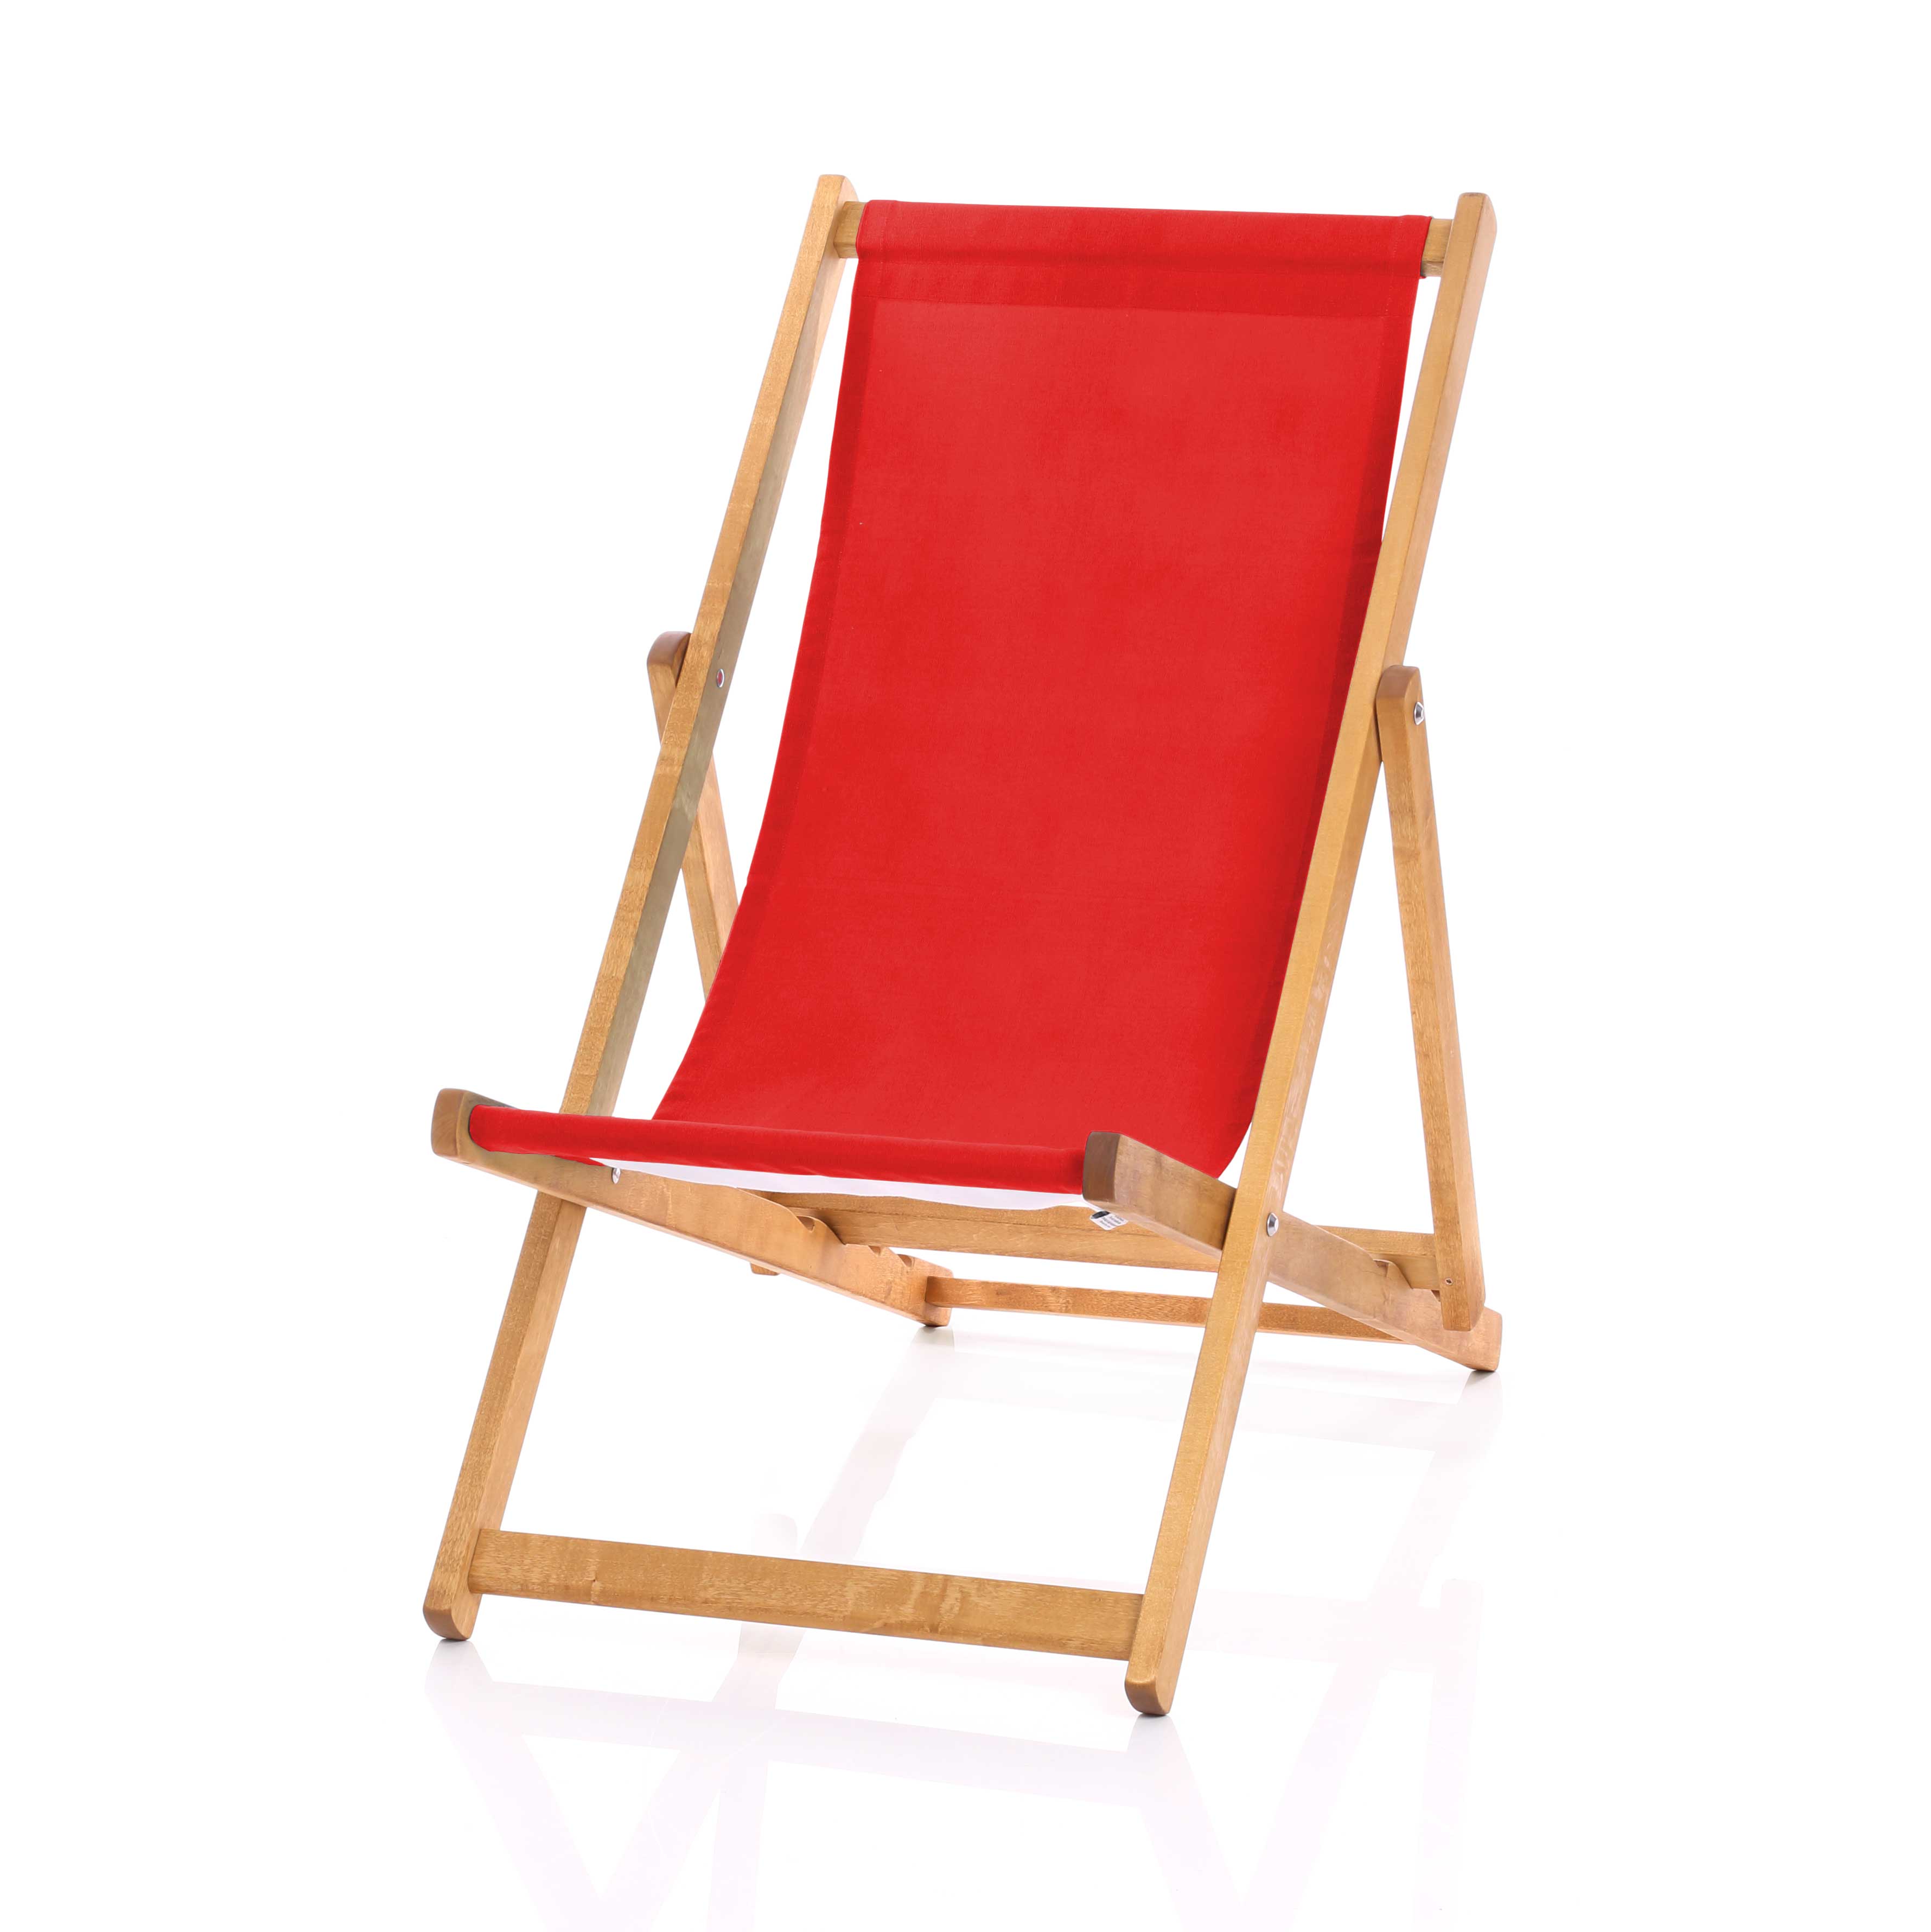 Hardwood Deckchair - Plain Red